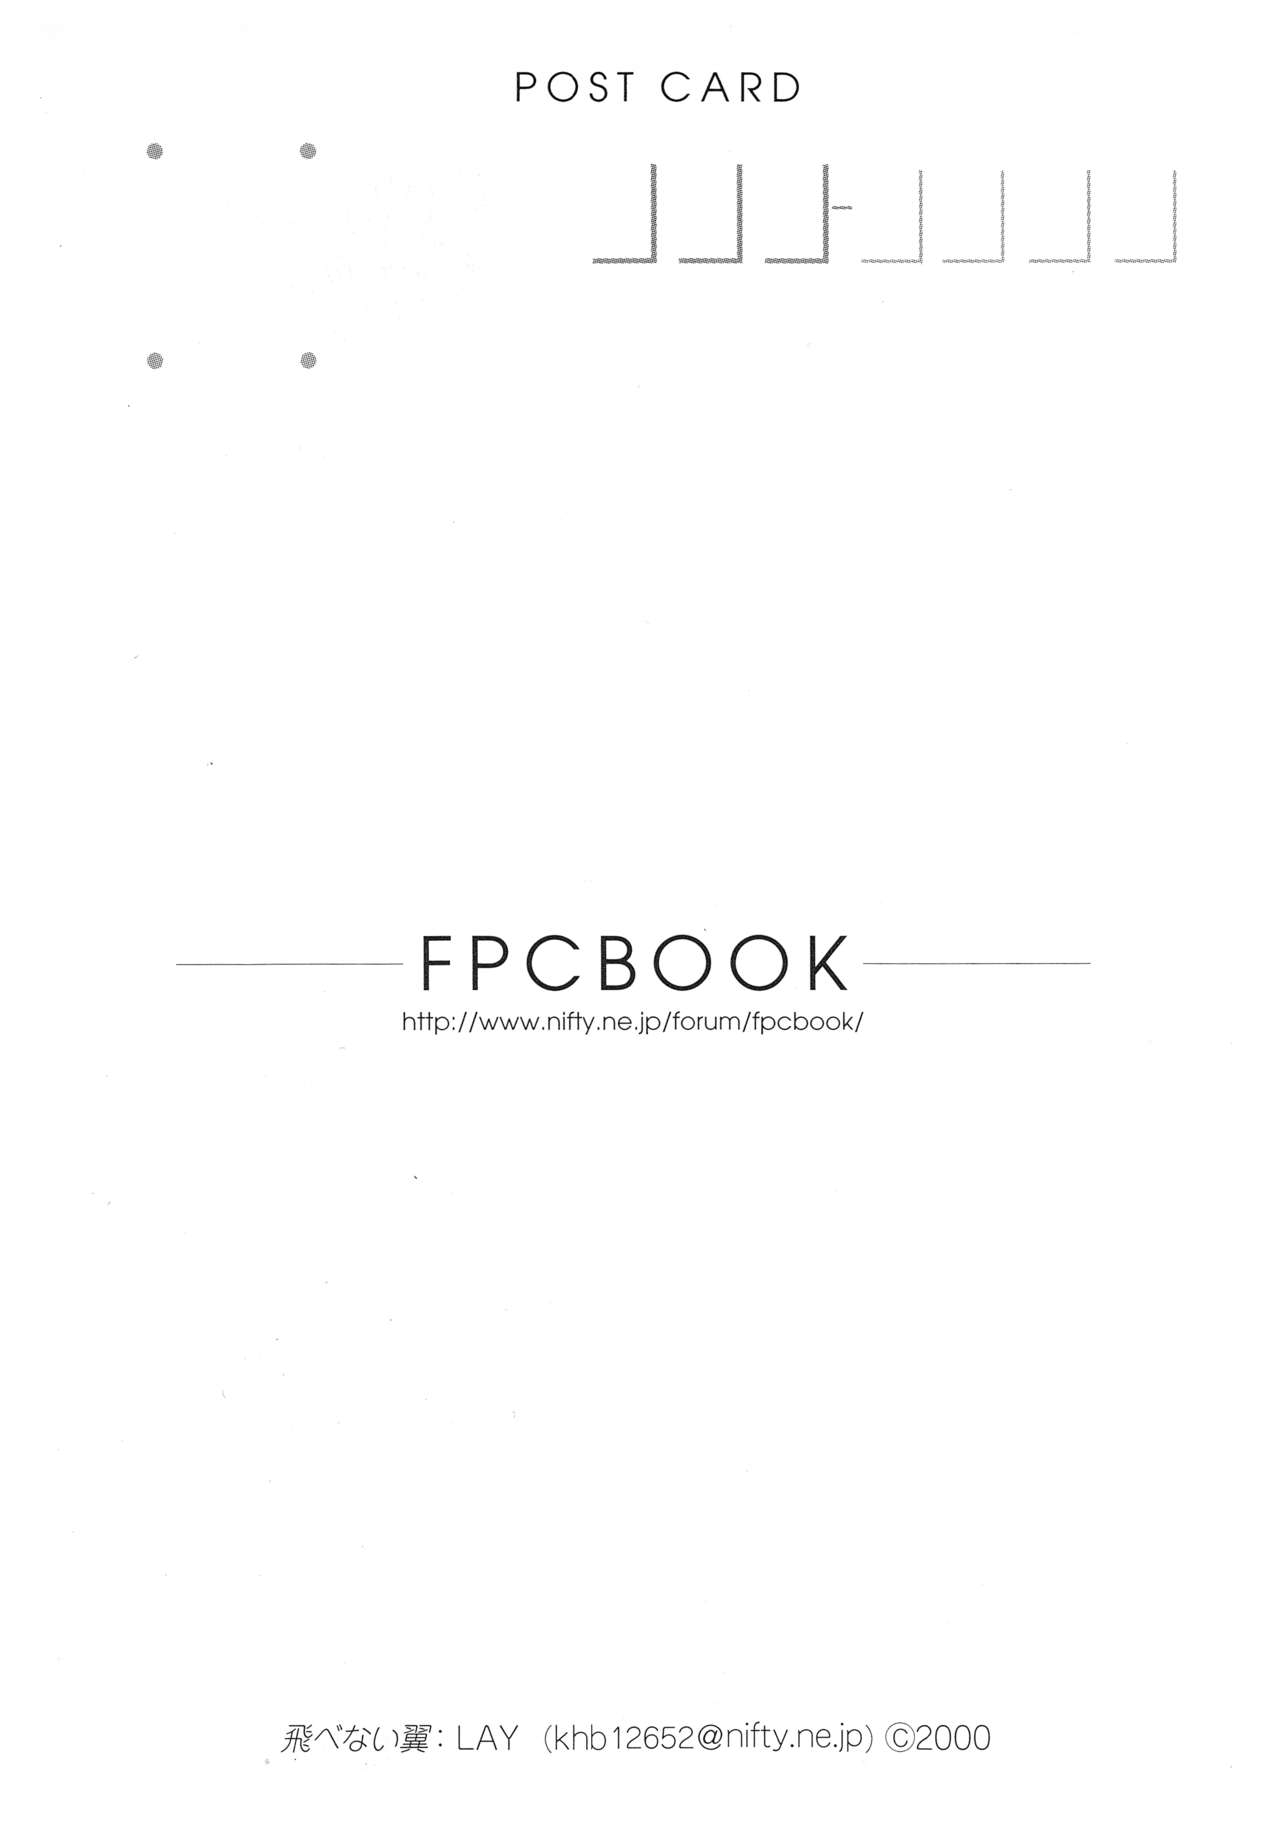 (C58) [Pasokon no Hon Forum] FPCBOOK POSTCARD BOOK 2000 5